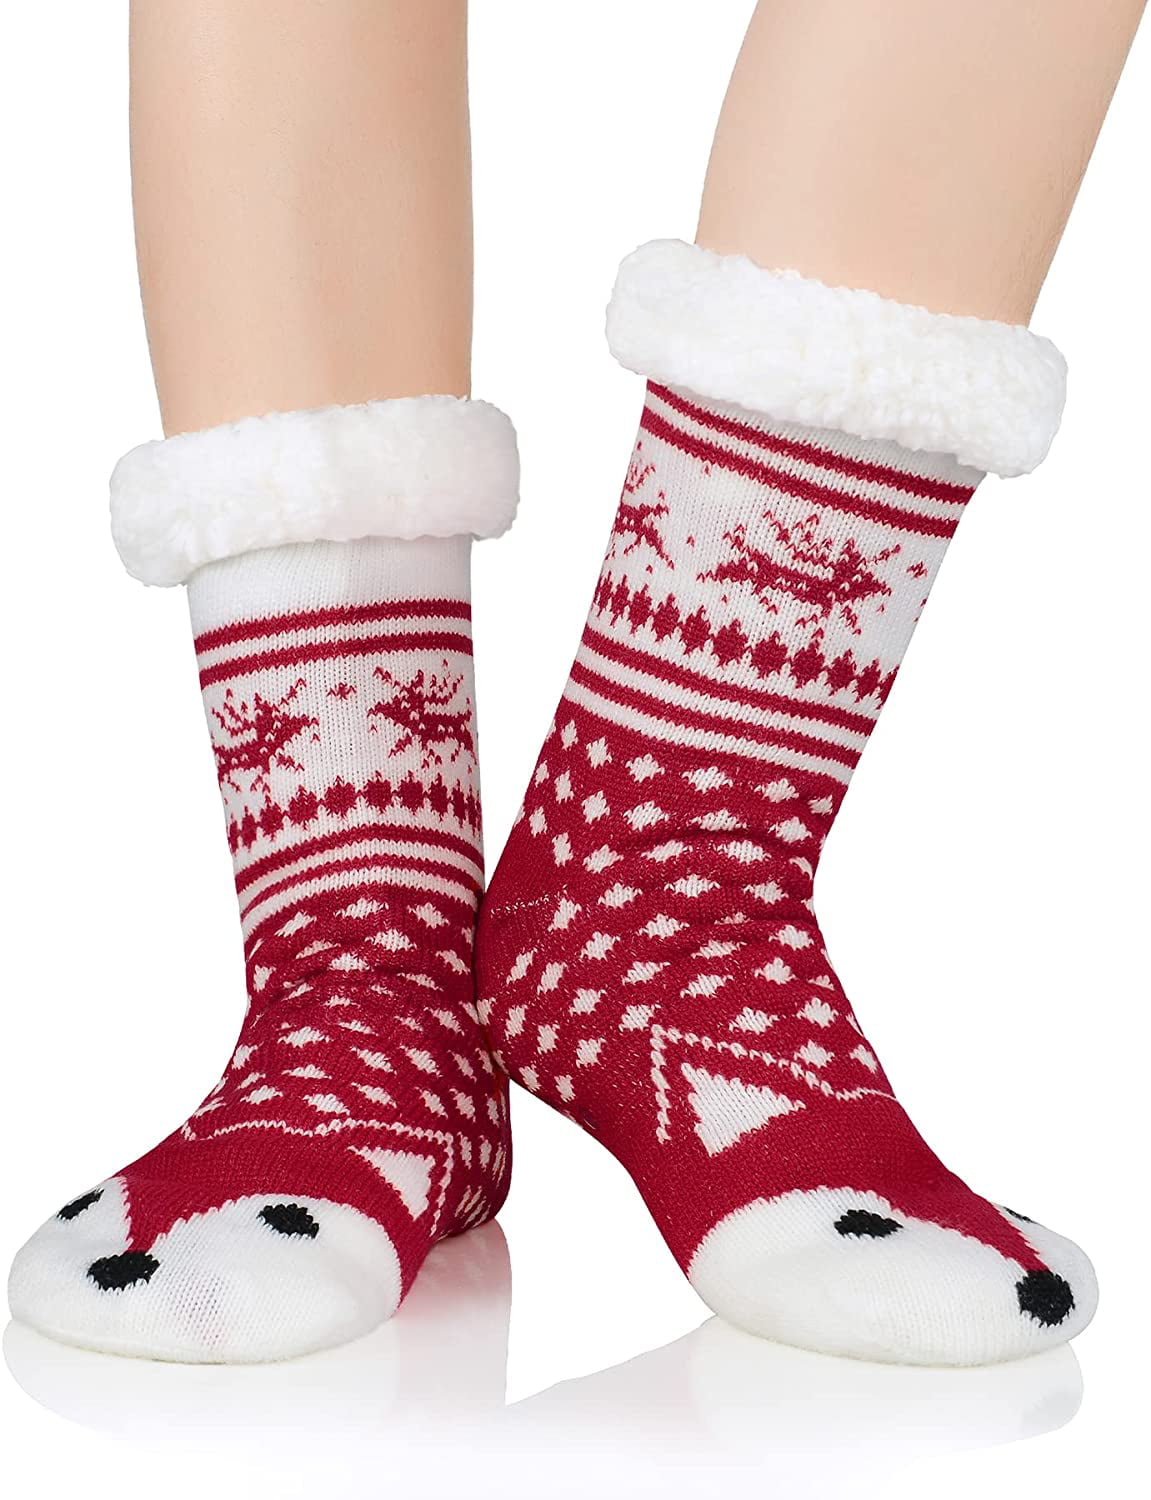 Winter Socks Plush Slipper Sock Warm Super Soft Winter Crew Socks Fluffy Microfiber Casual Home Sleeping Fuzzy Cozy Sock 